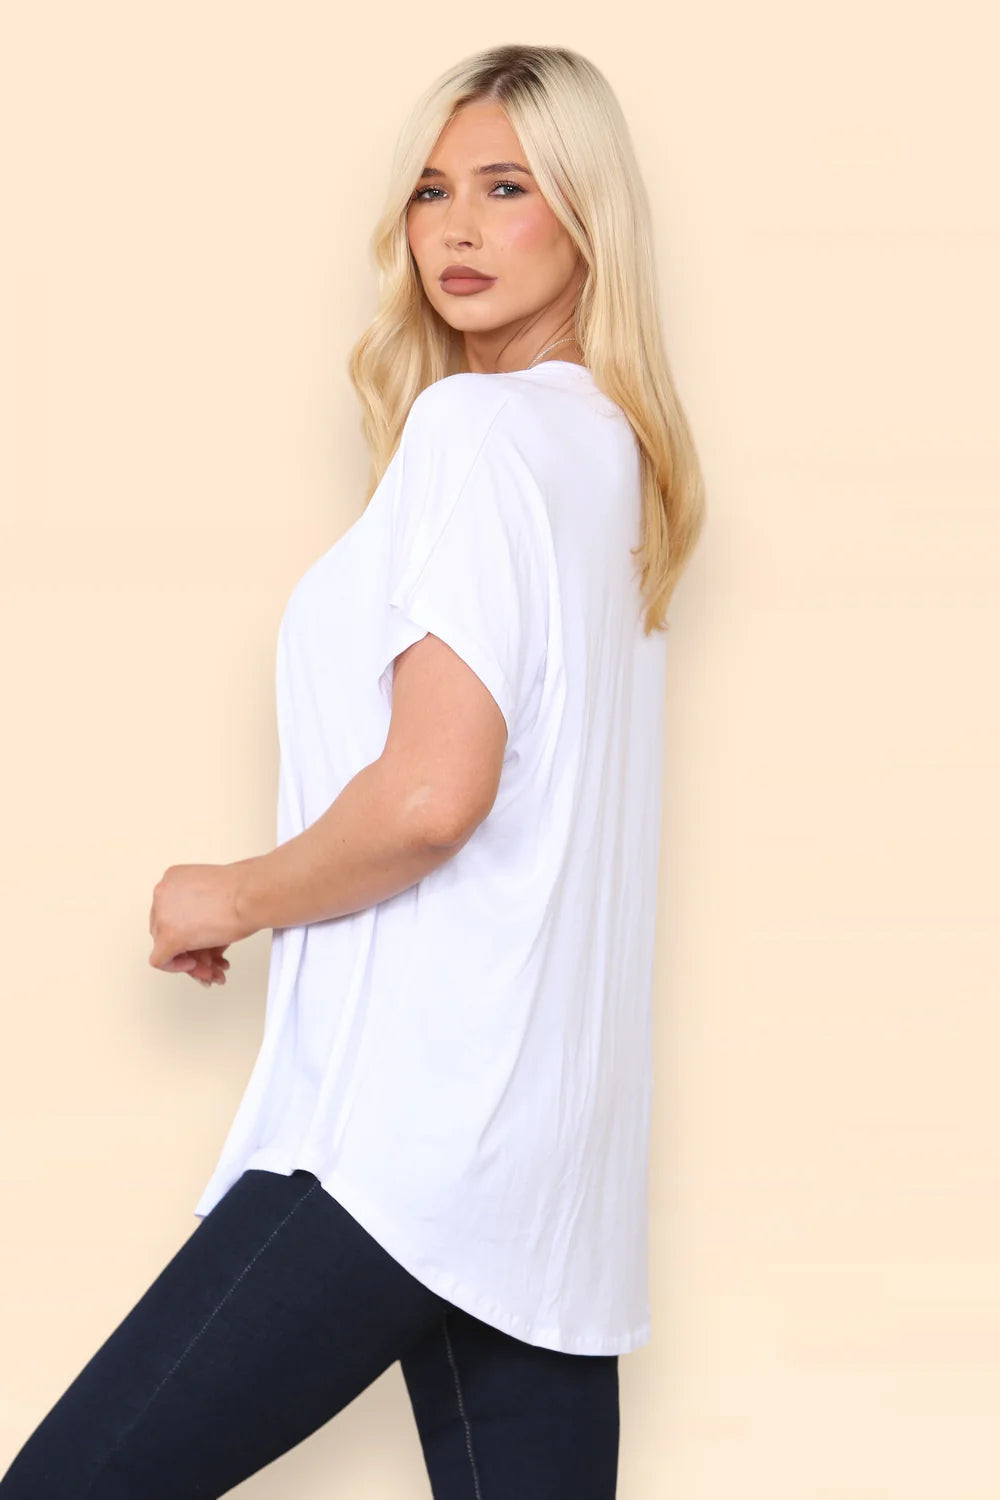 Women's Vera Cap Sleeve T-Shirt, UK One Size, White, Luxe Fabric, 73cm Length